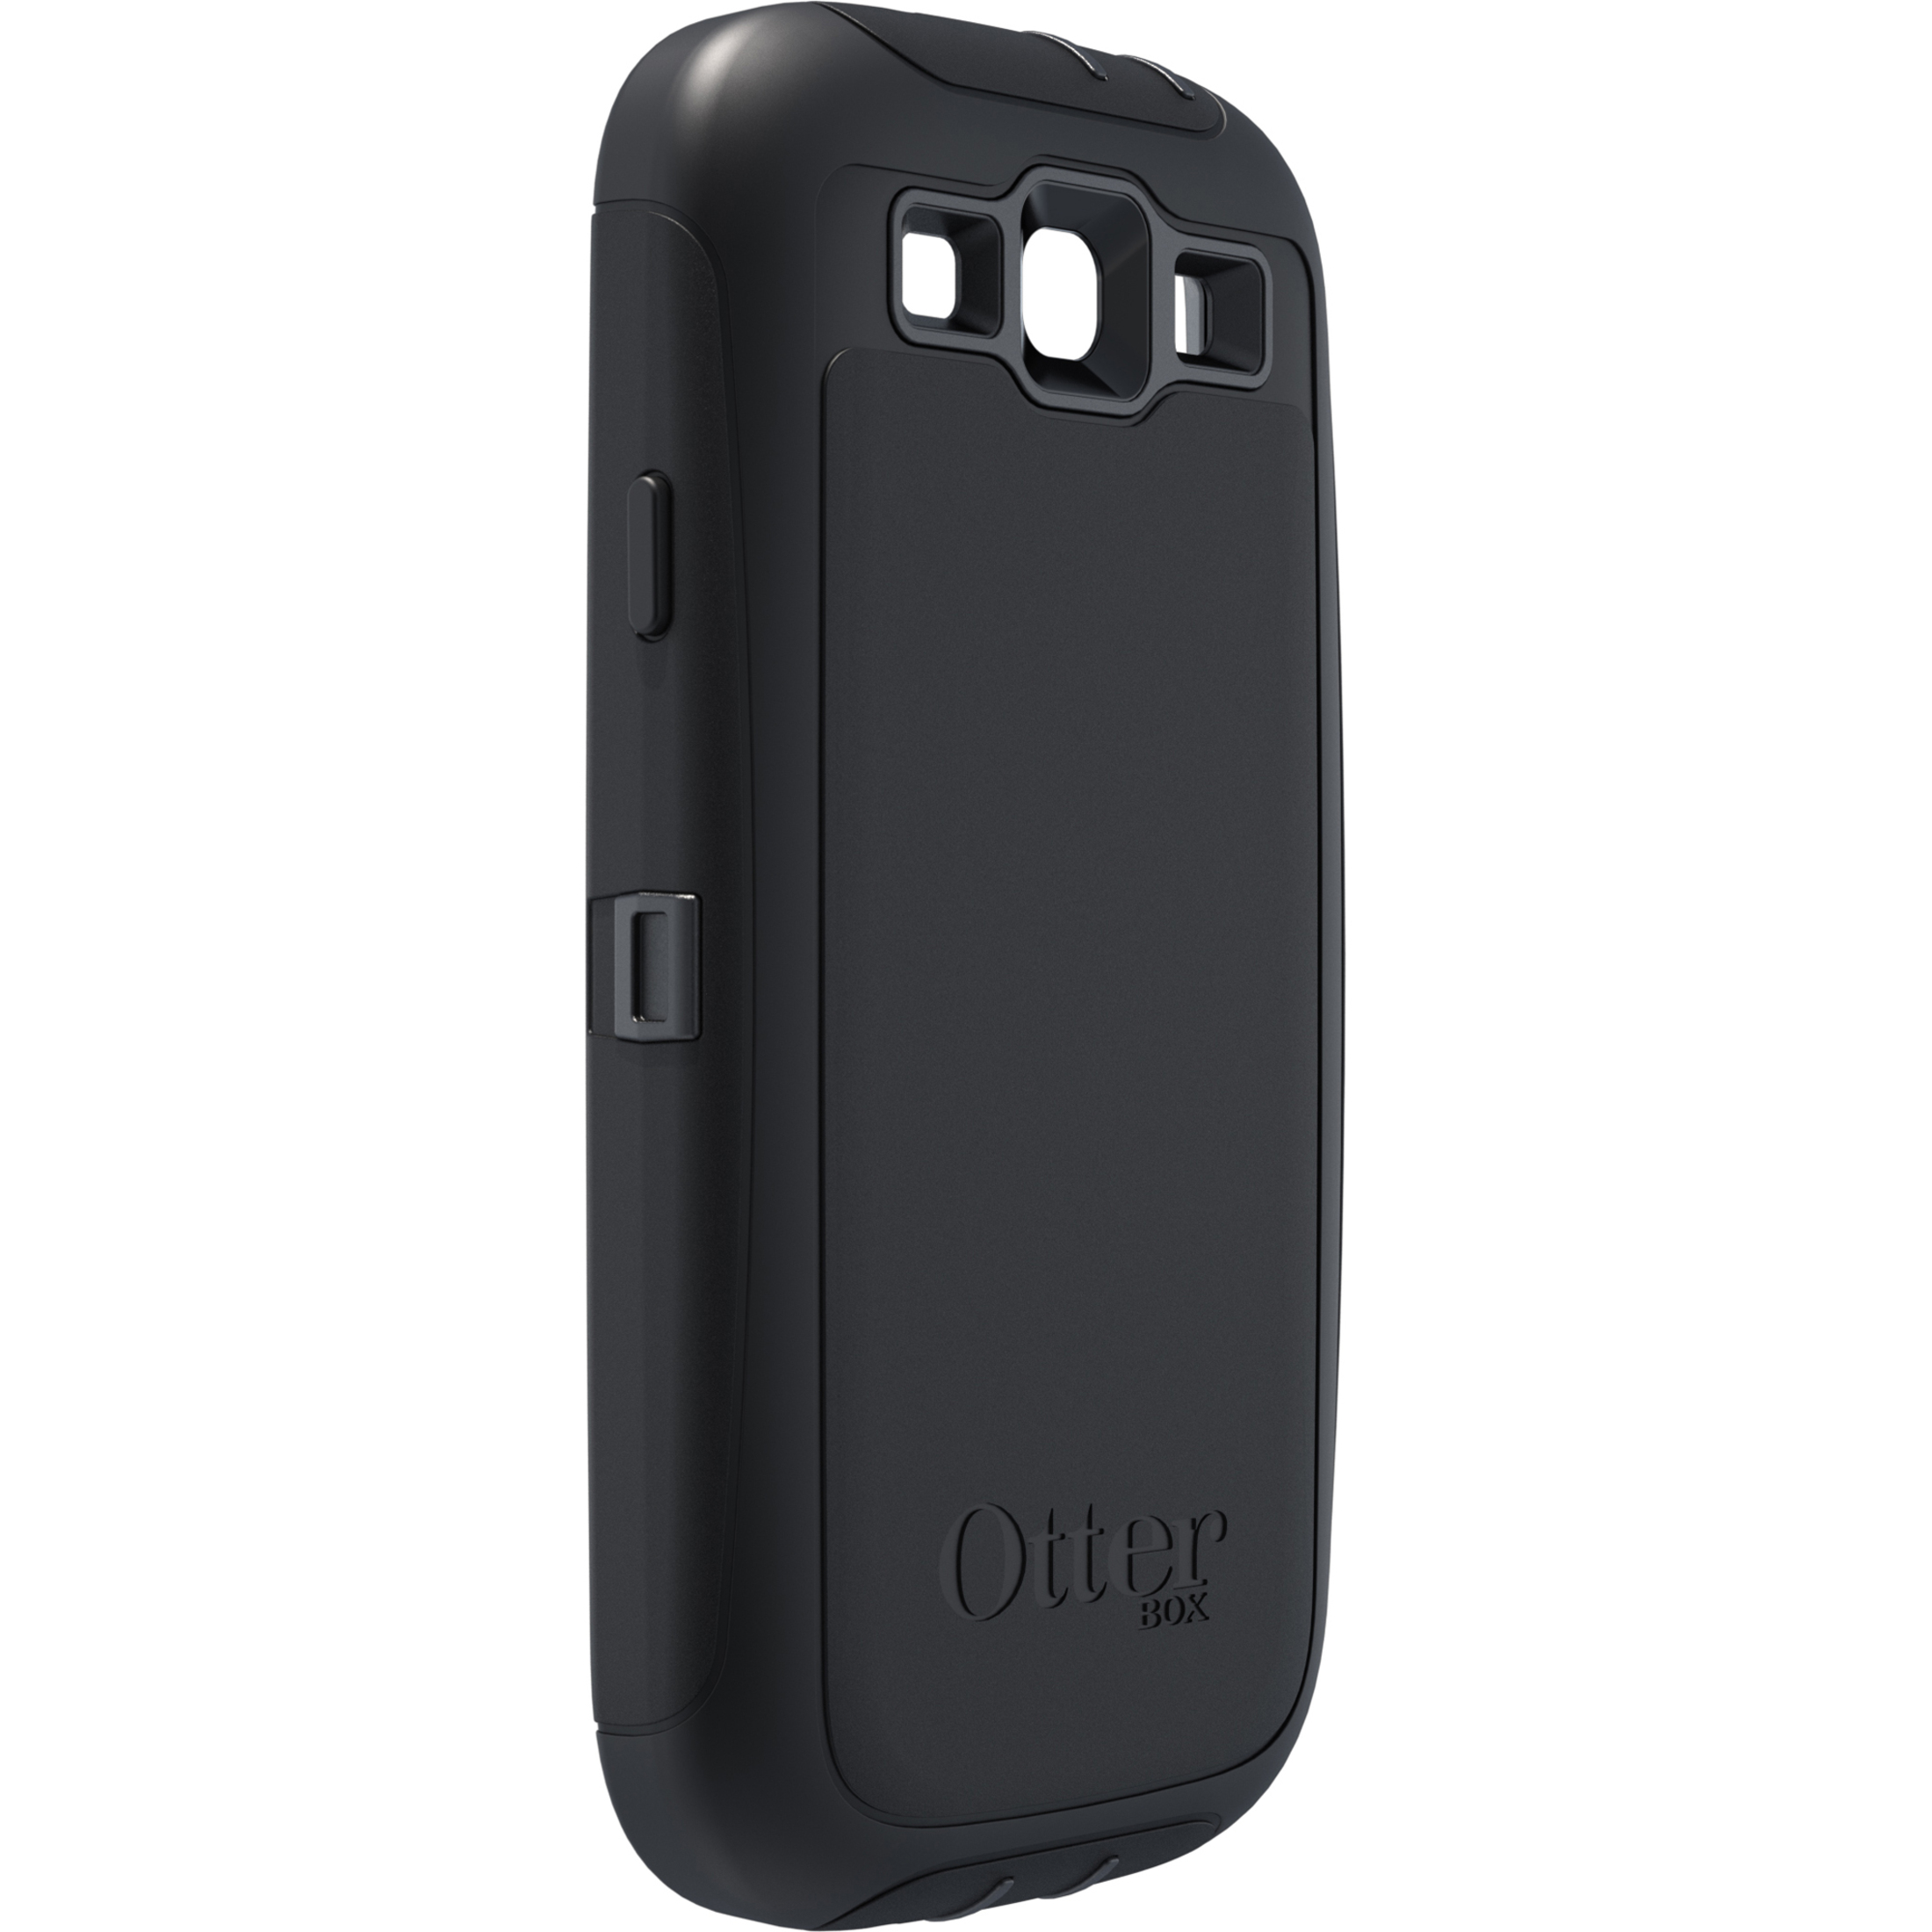 OtterBox Defender Carrying Case (Holster) Smartphone, Black - image 1 of 3